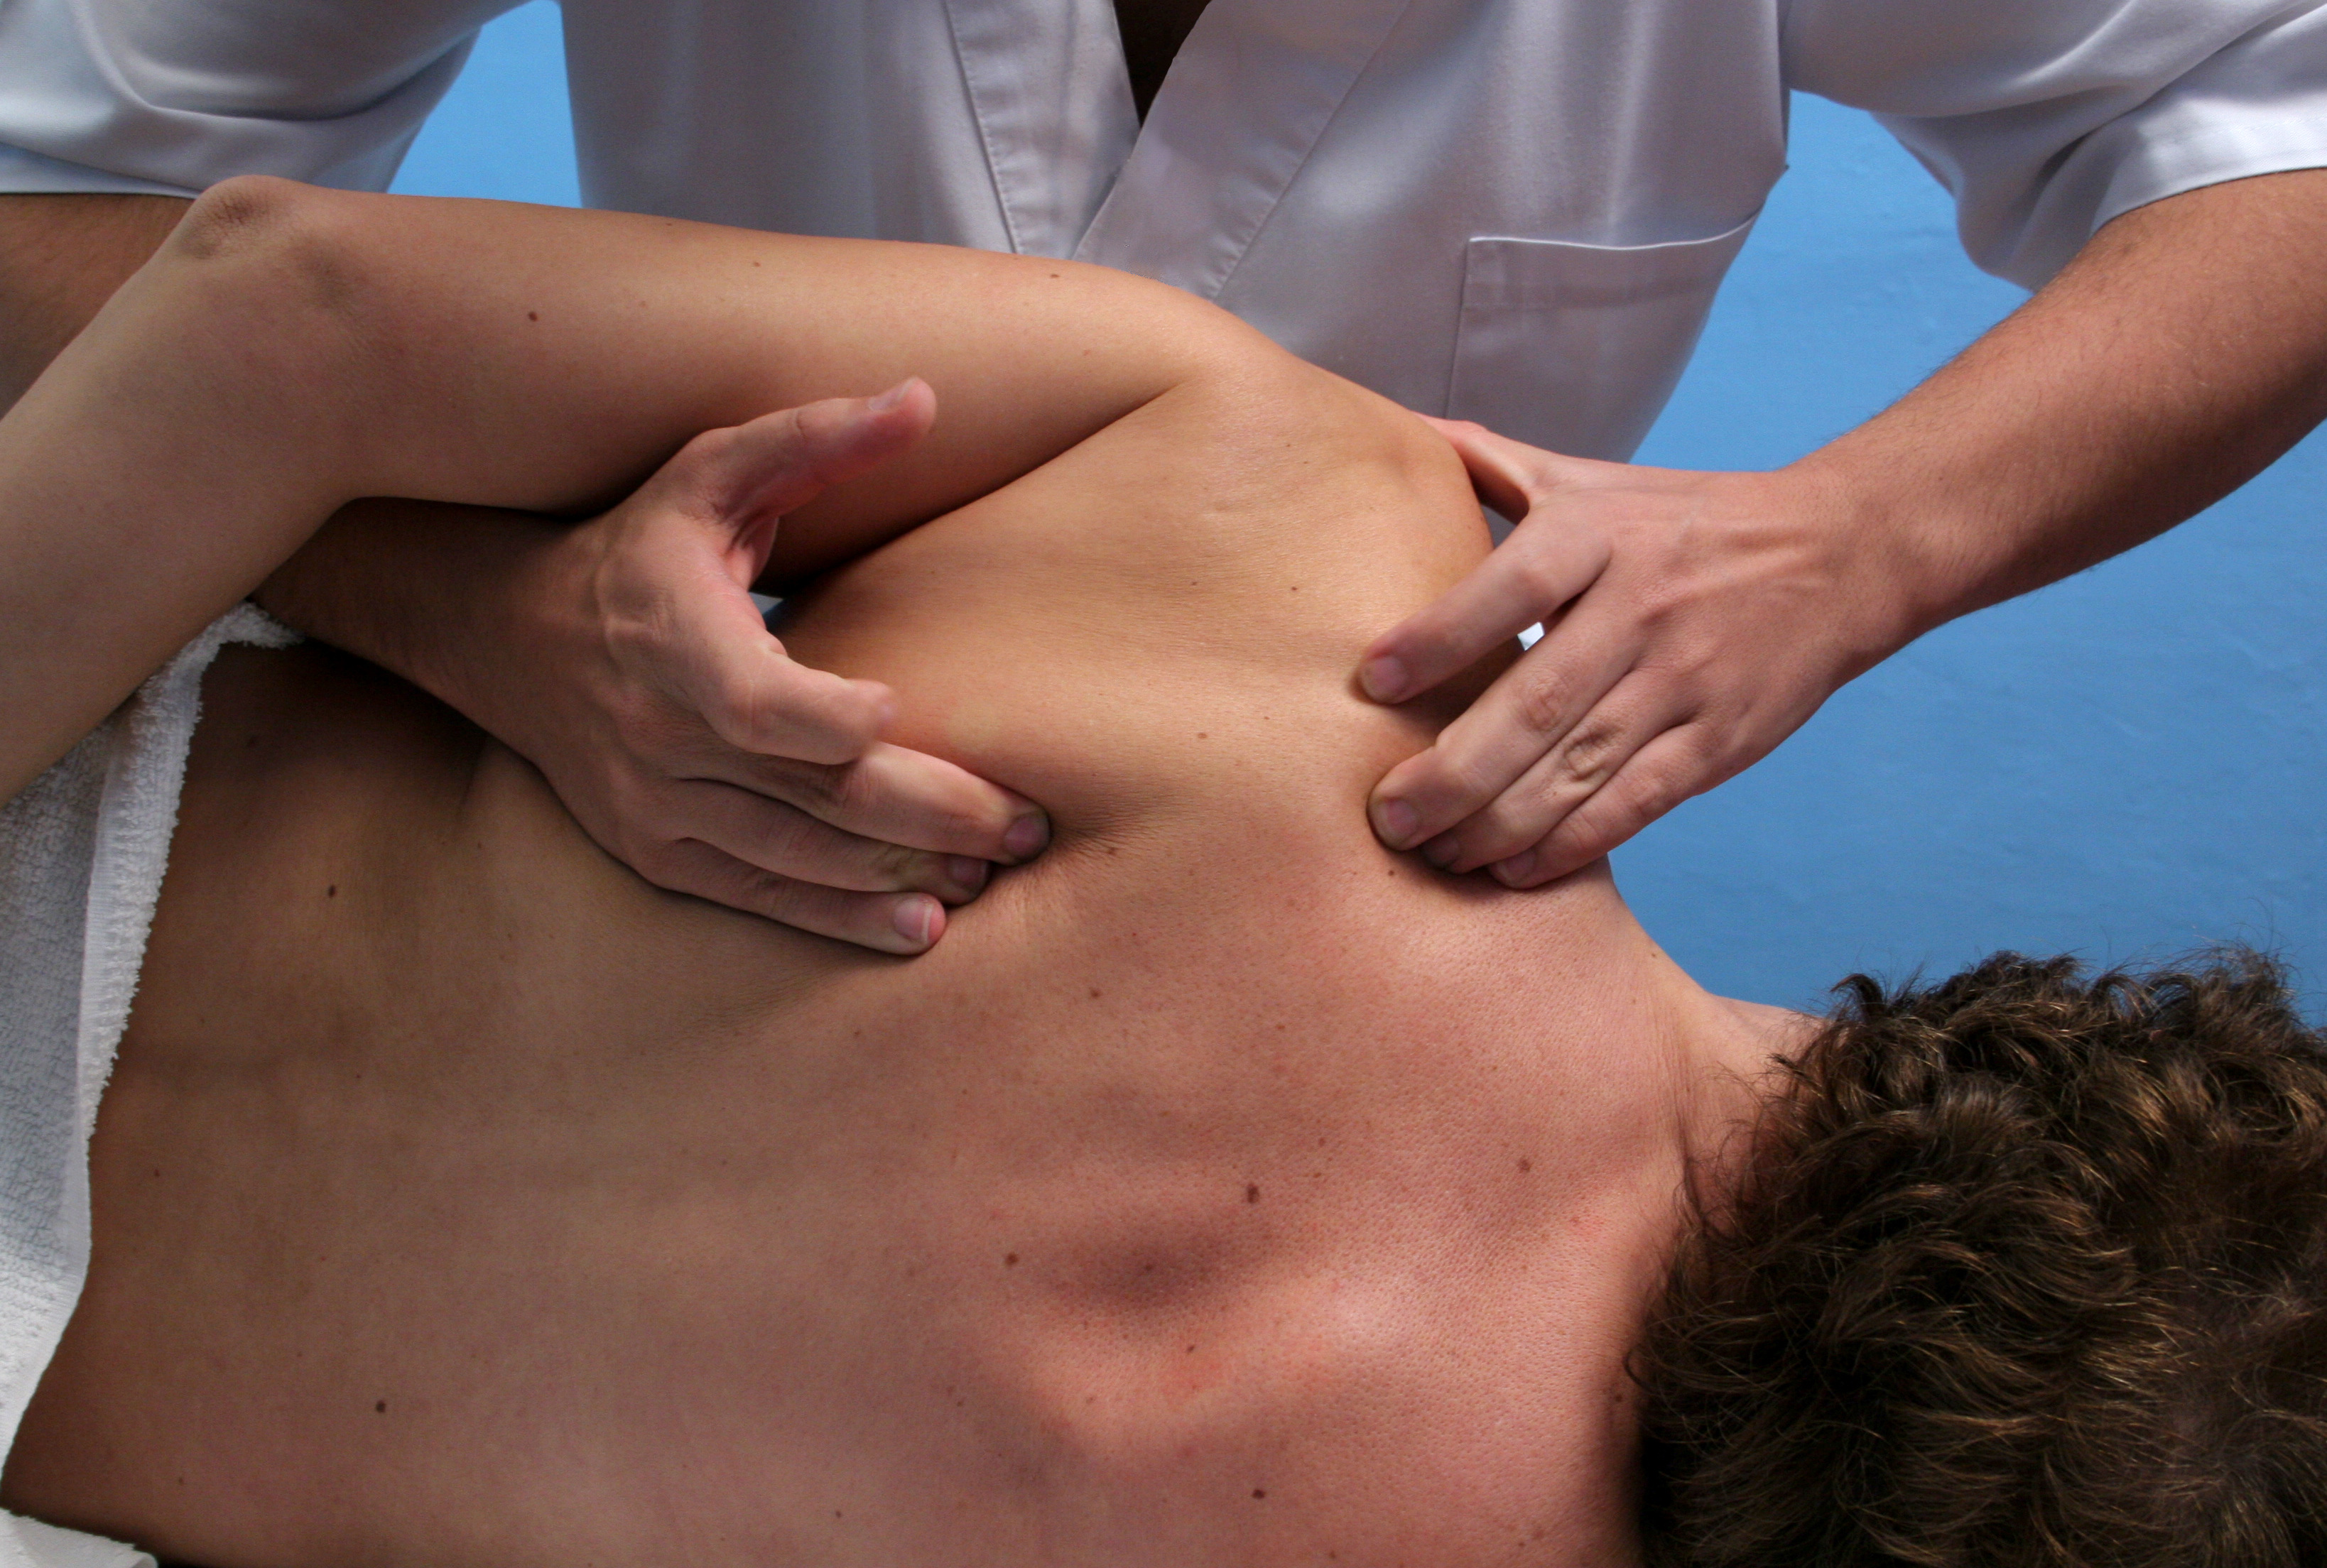 http://www.massagebook.com/massage-therapy/wp-content/uploads/2015/09/Rolfing-Massage-1.jpg